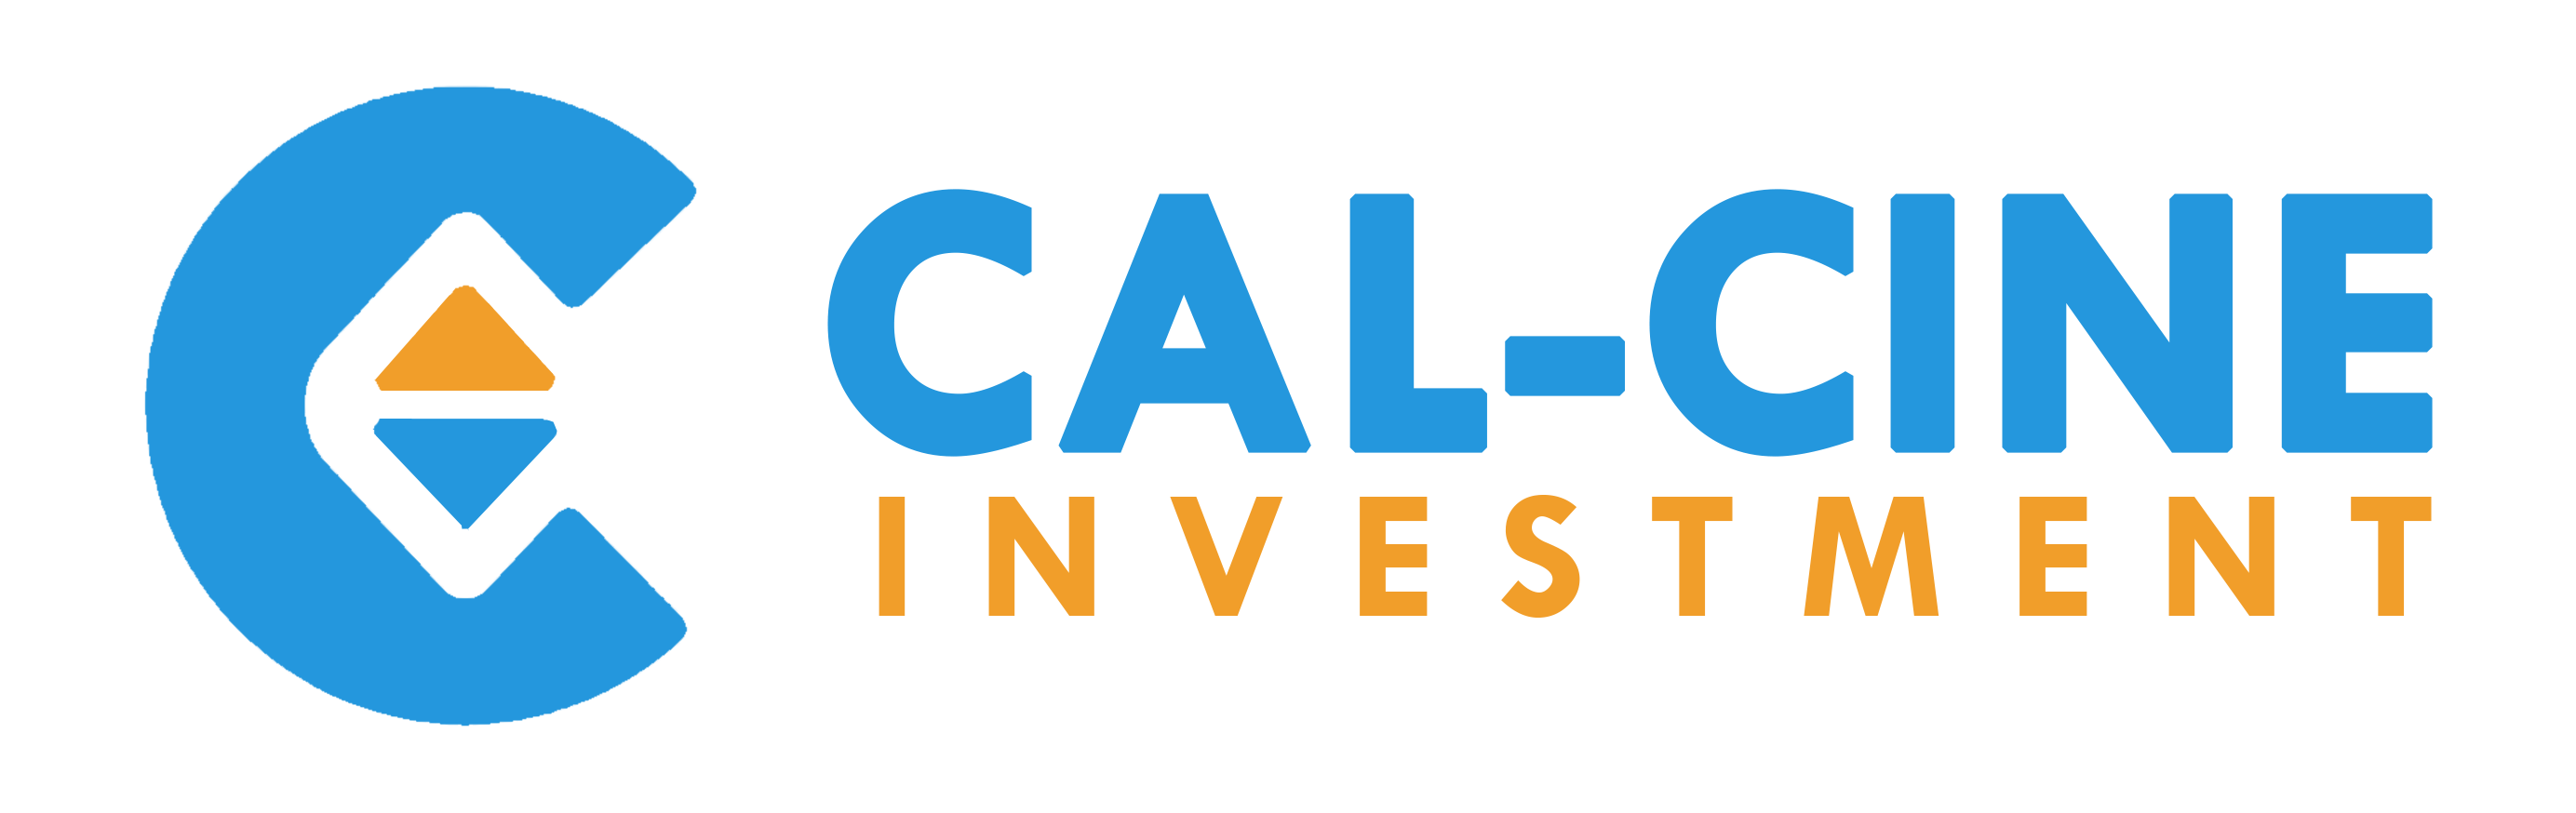 Cal-cine Investment